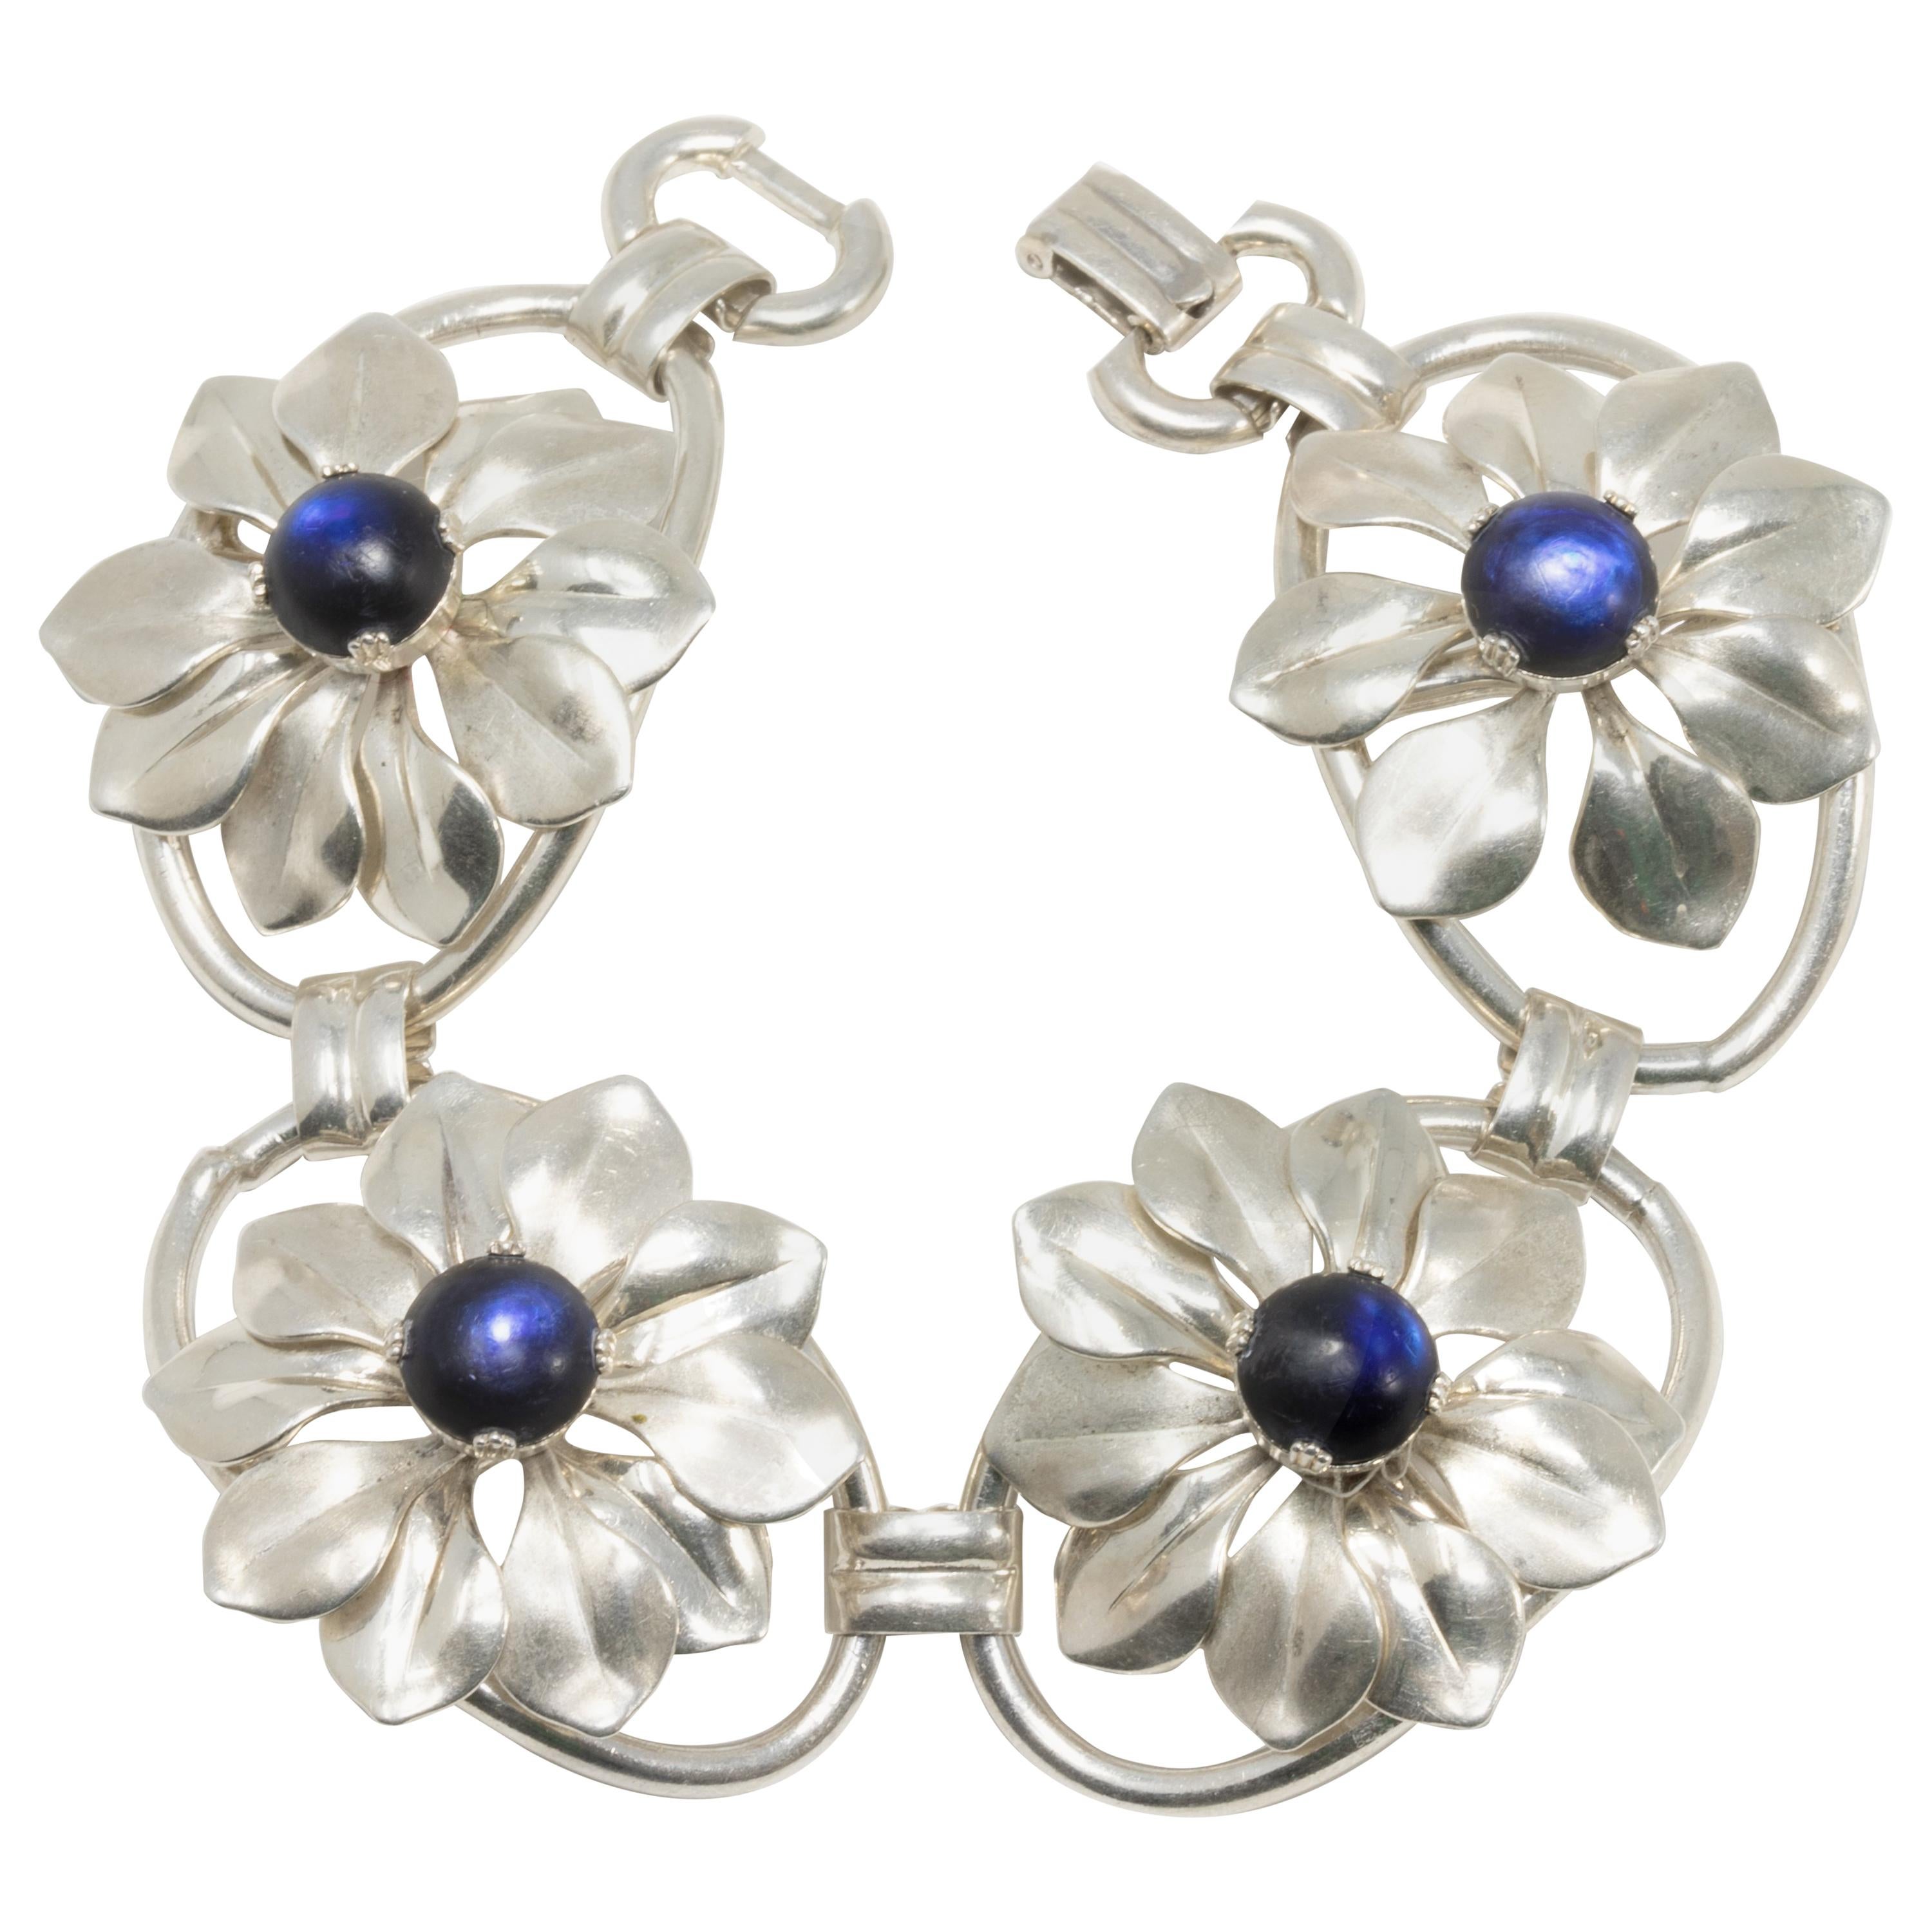 Kreisler Deep Blue Gemstone Sterling Silver Flower Link Bracelet, Foldover Clasp